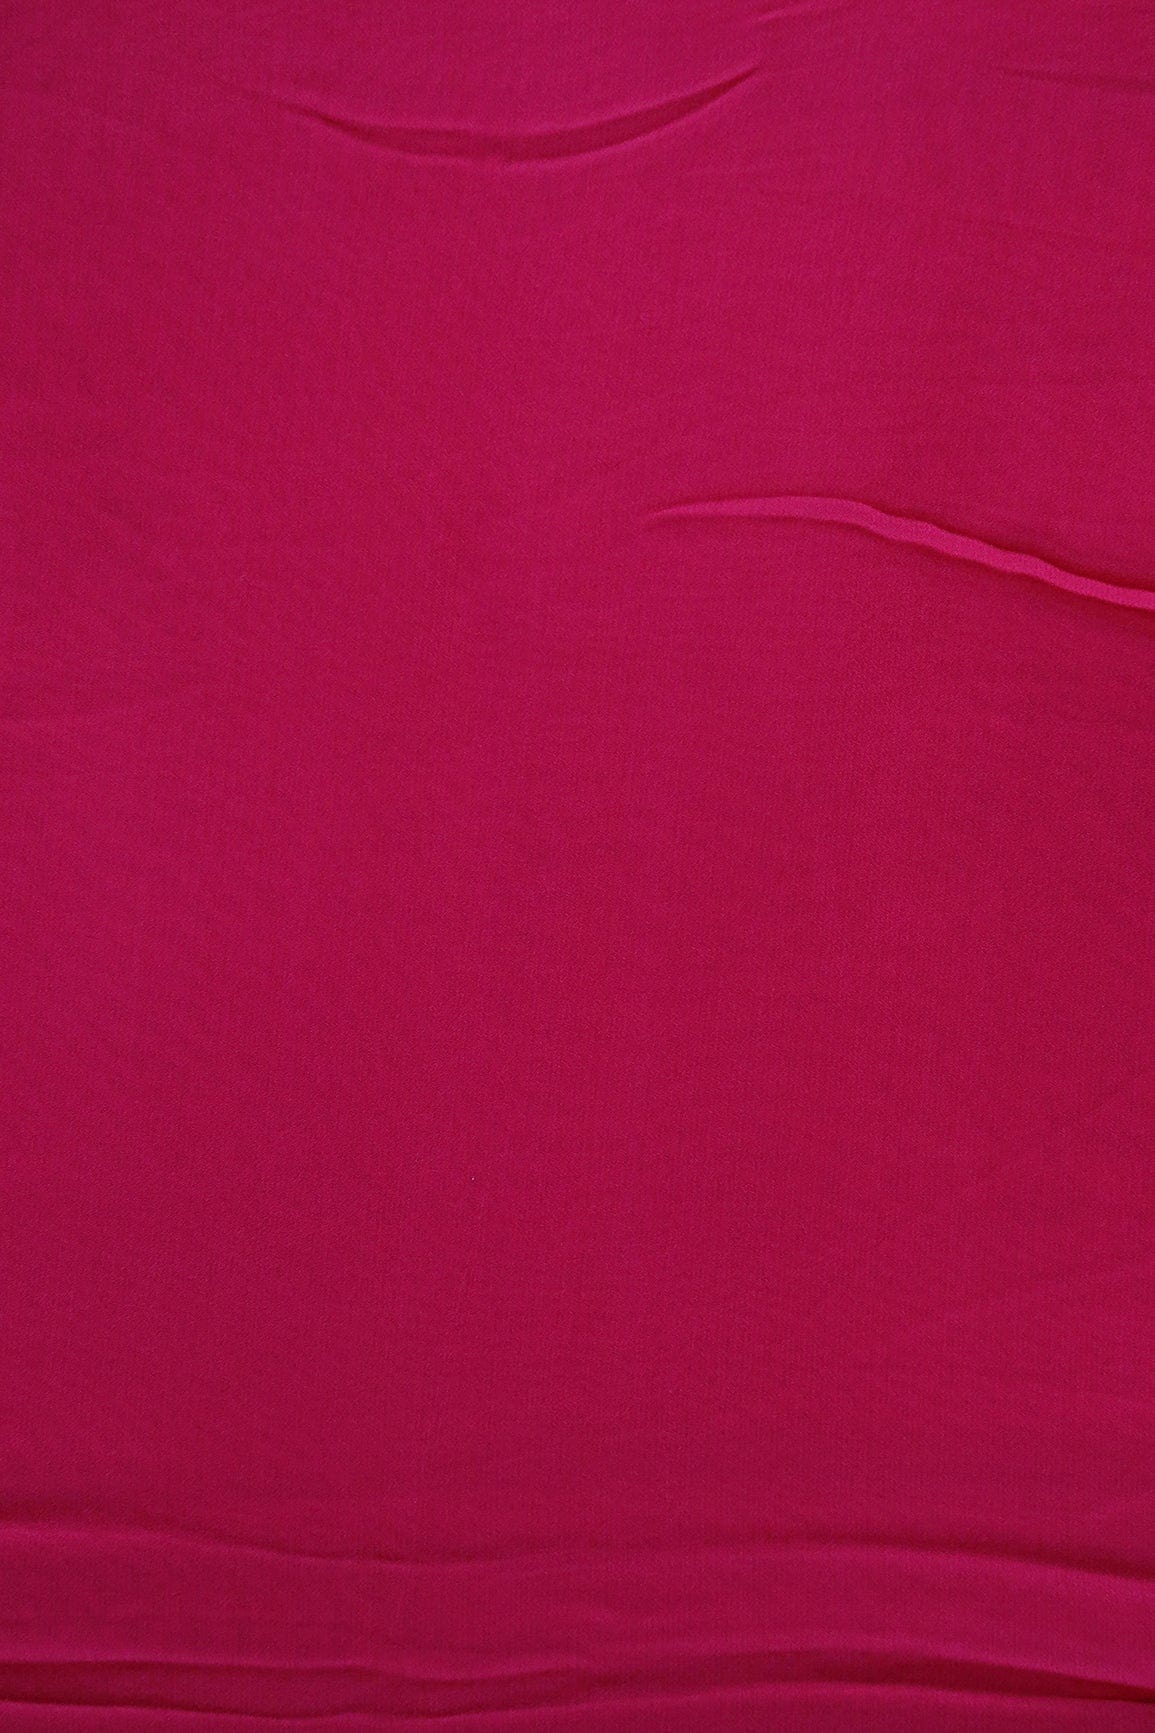 doeraa Plain Fabrics Fuchsia Dyed Viscose Georgette Fabric